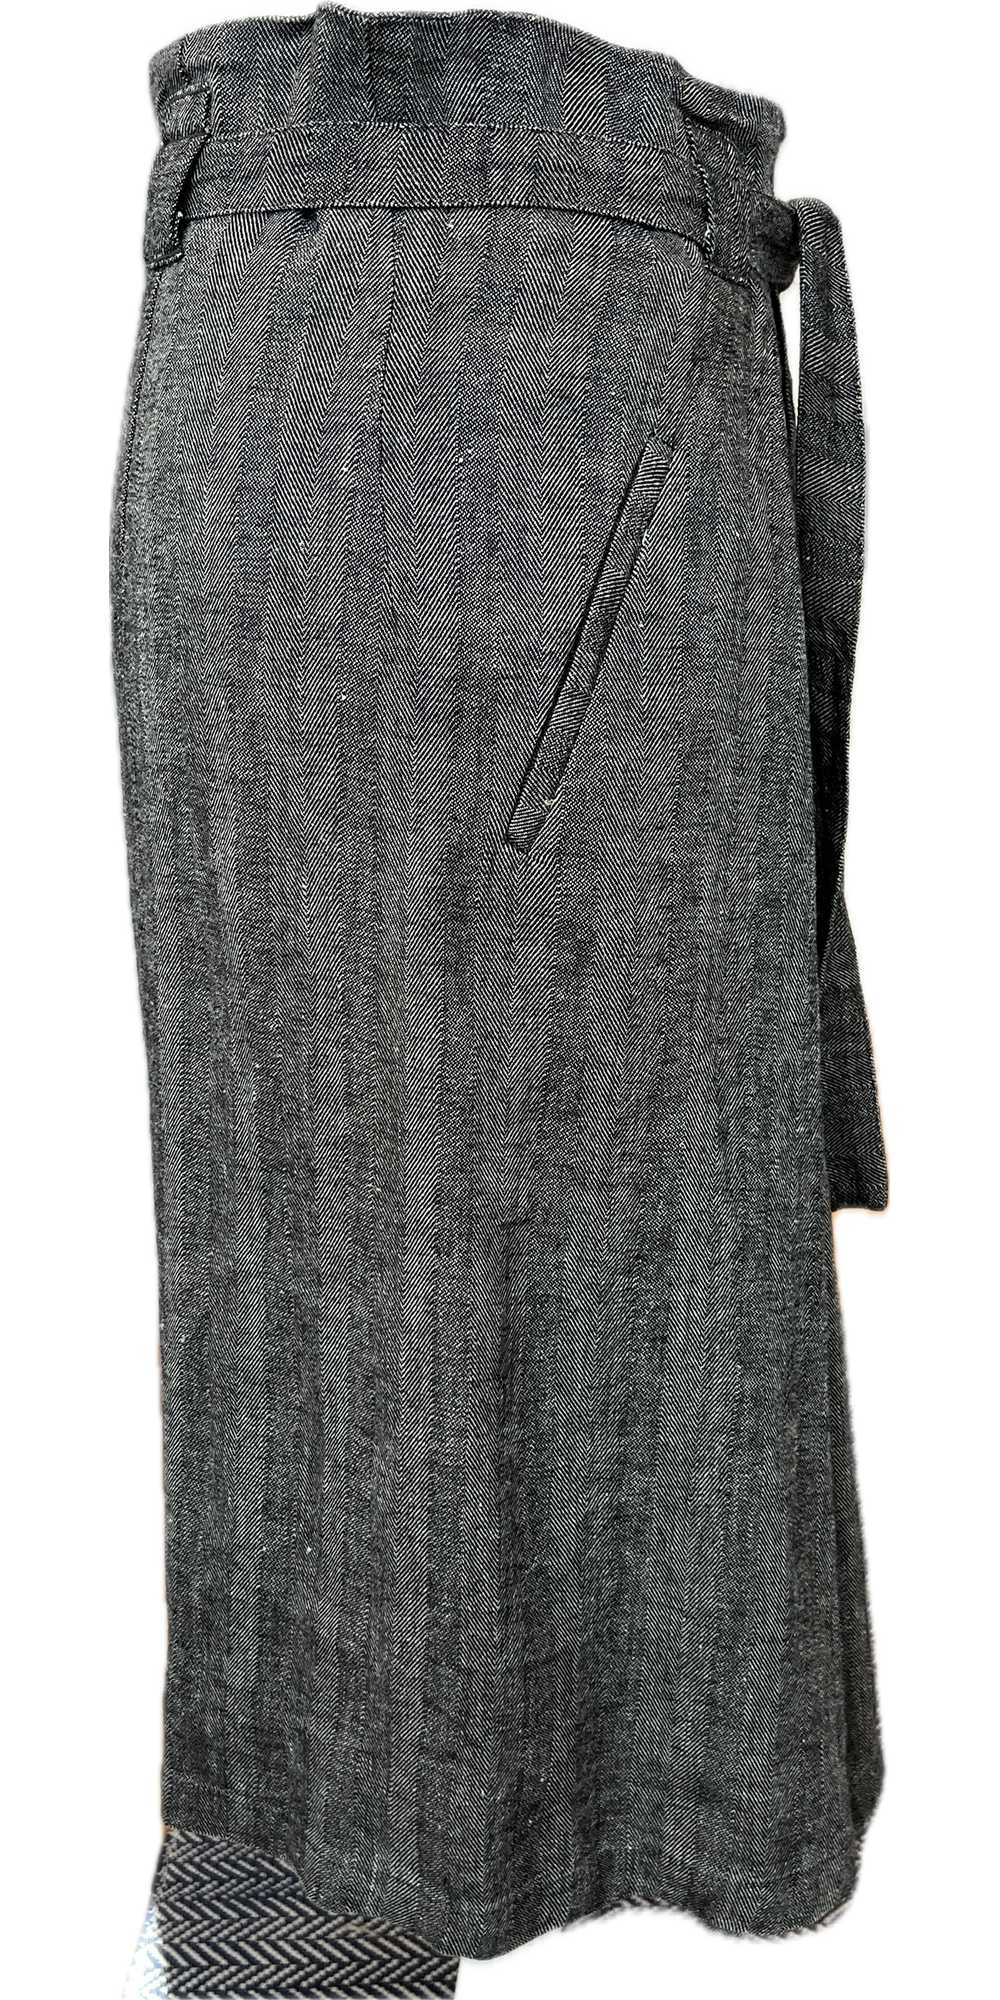 Cotélac Black and Tan Linen Blend Belted Skirt, 0 - image 2